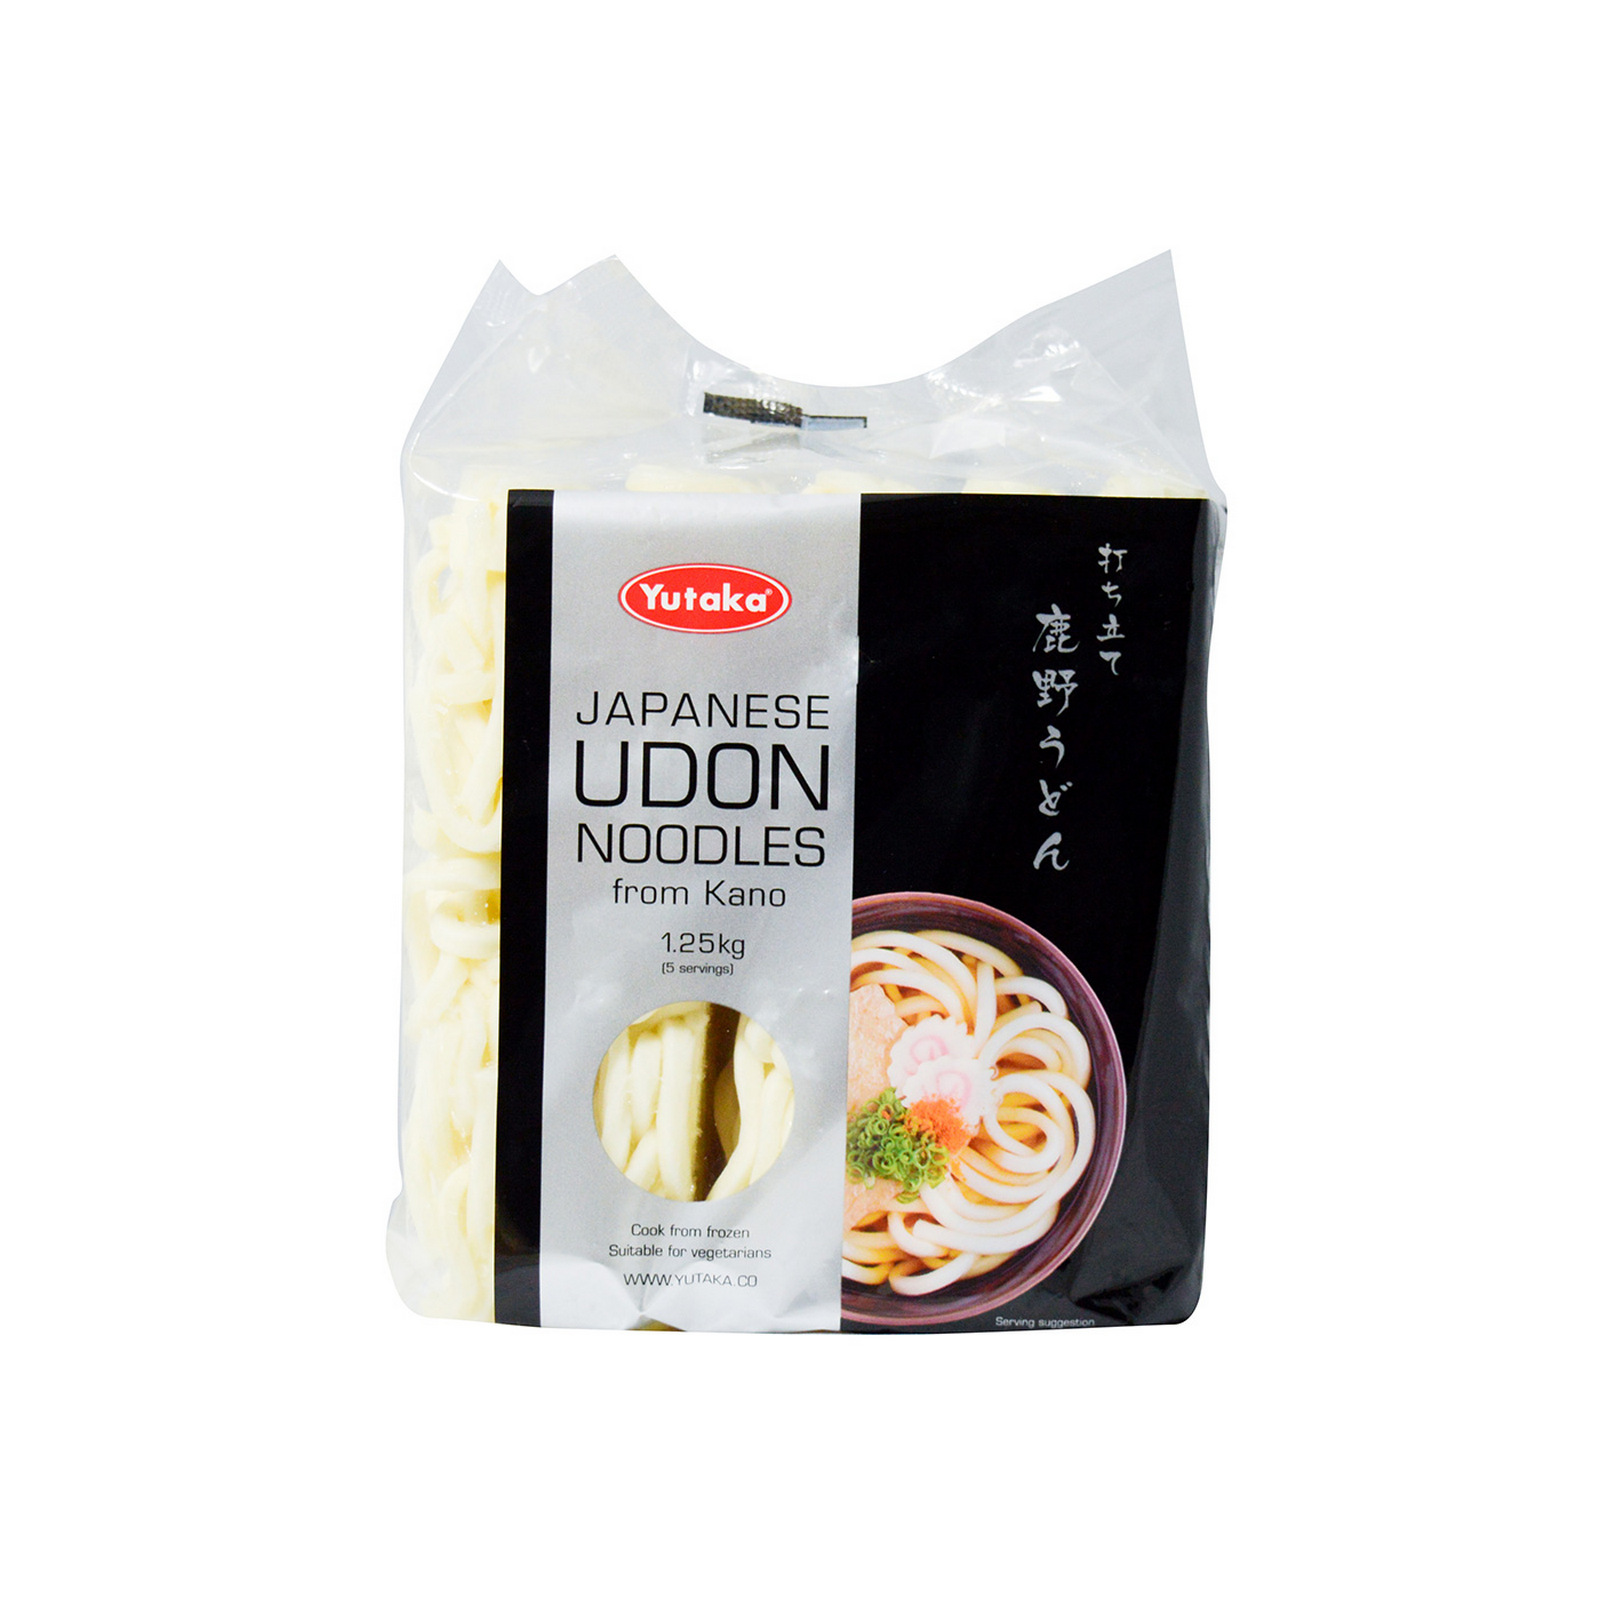 Kano Udon noodles